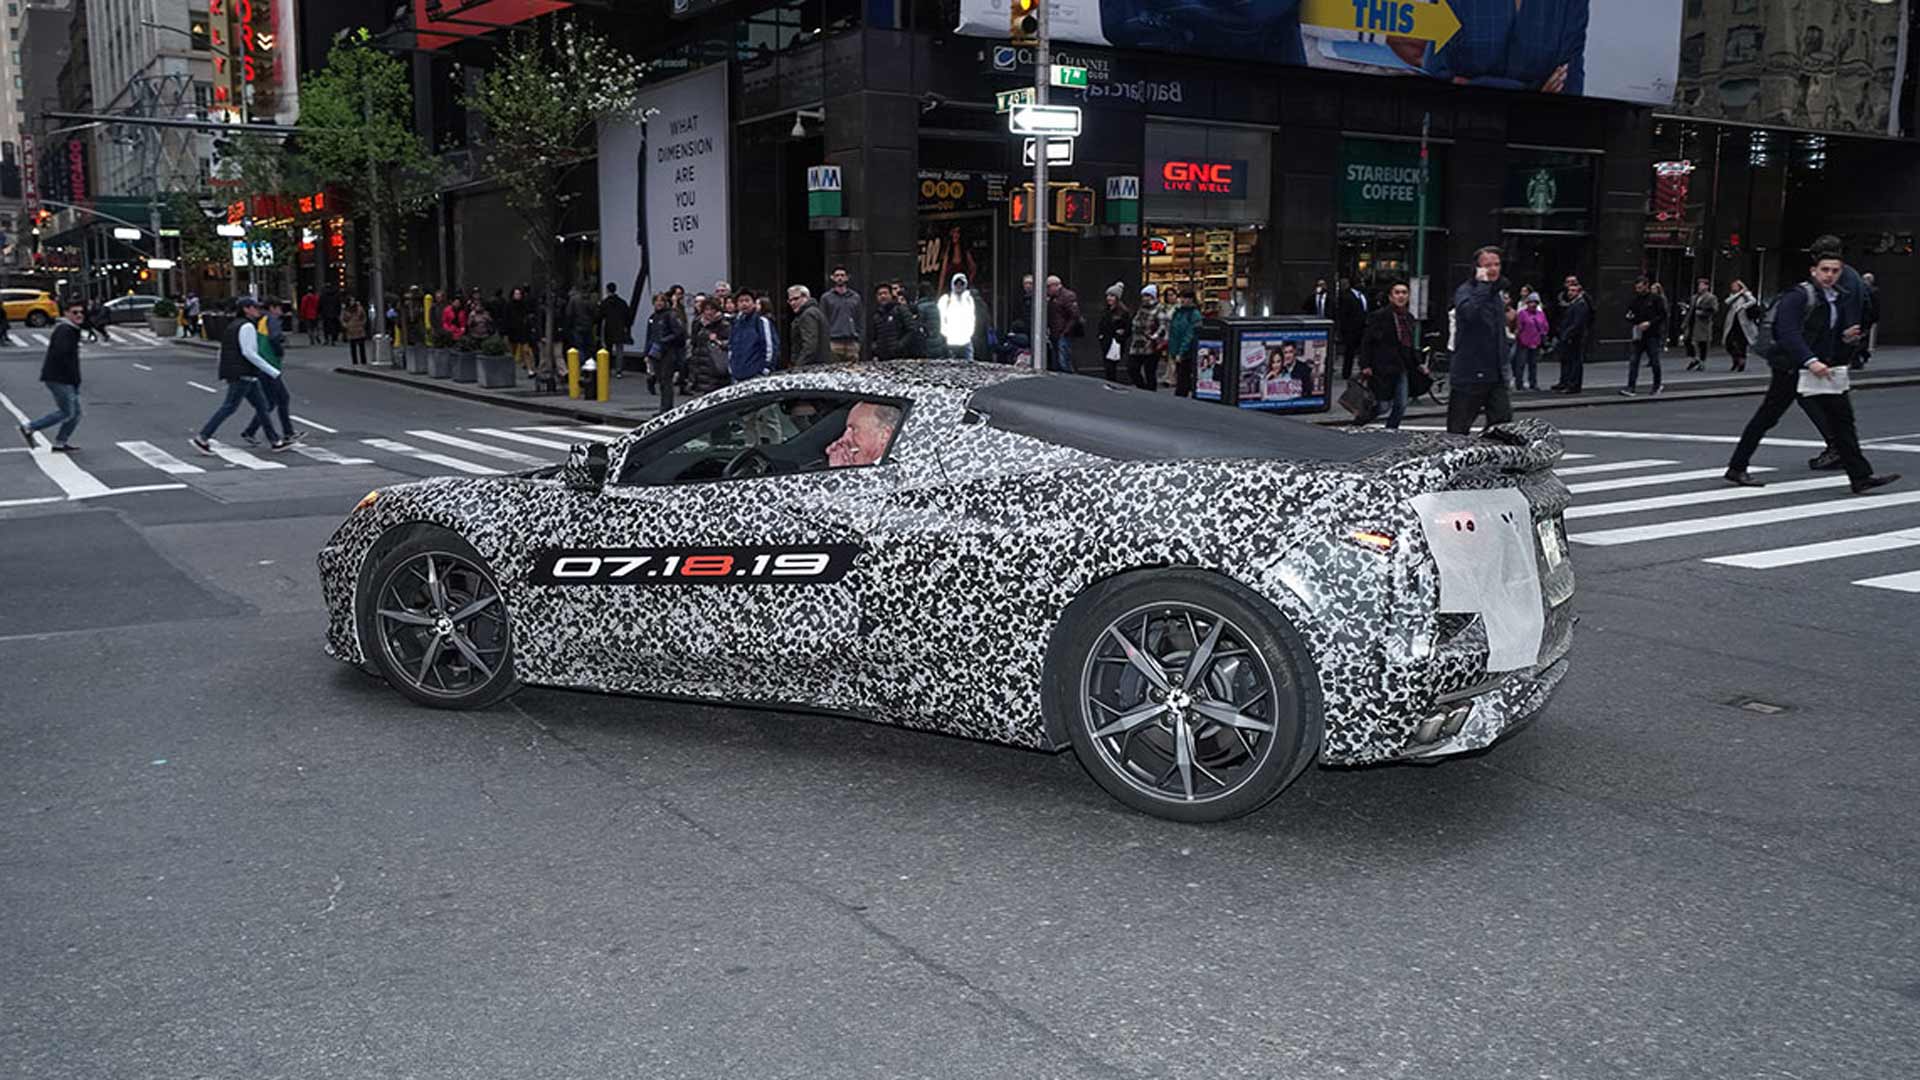 C8 Corvette hidden in plain sight